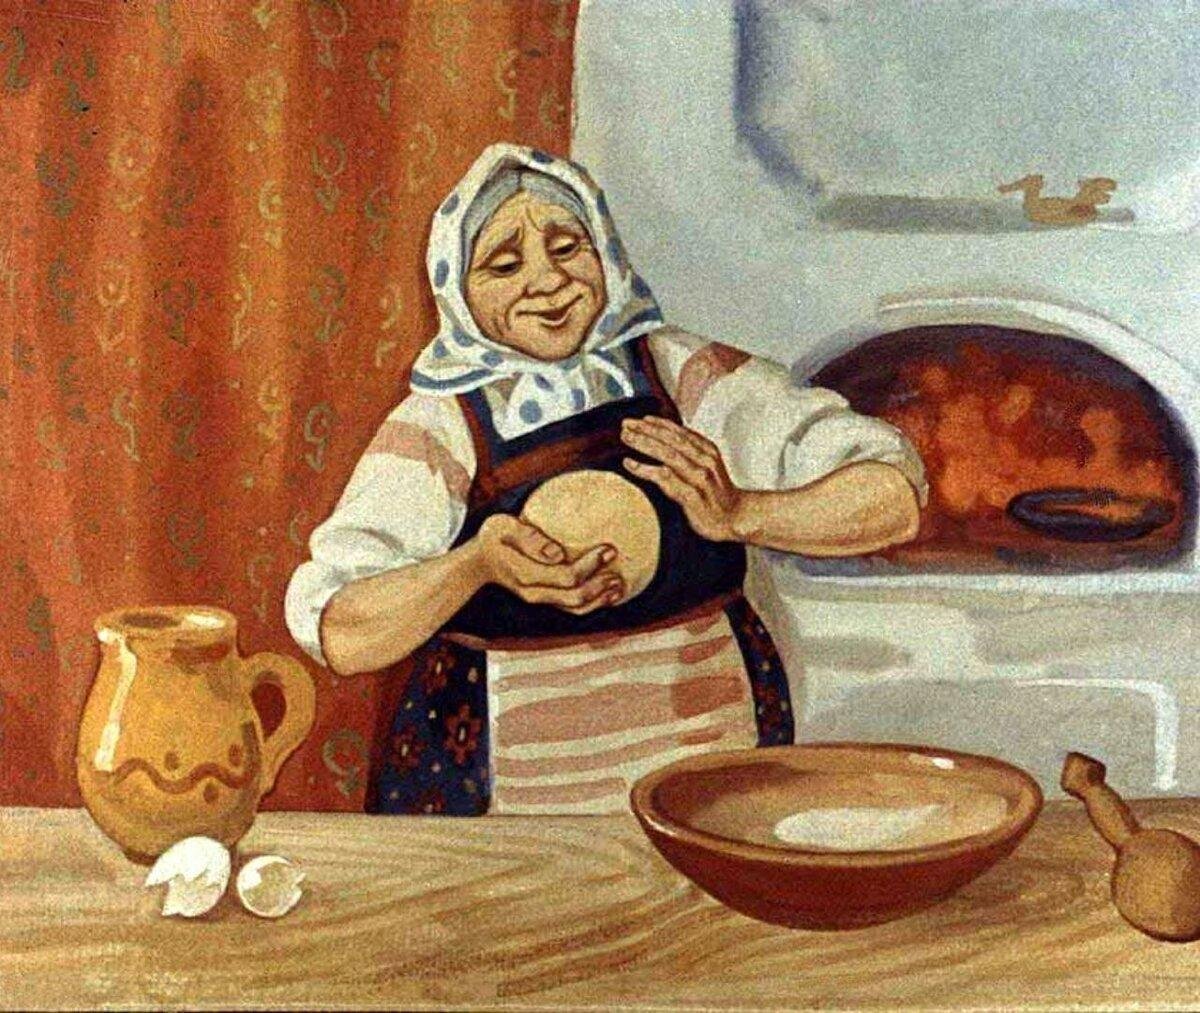 Тесто замесили песня. Старуха печет Колобок. Бабушка месит тесто. Бабушка с пирожками. Бабка лепит колобка.